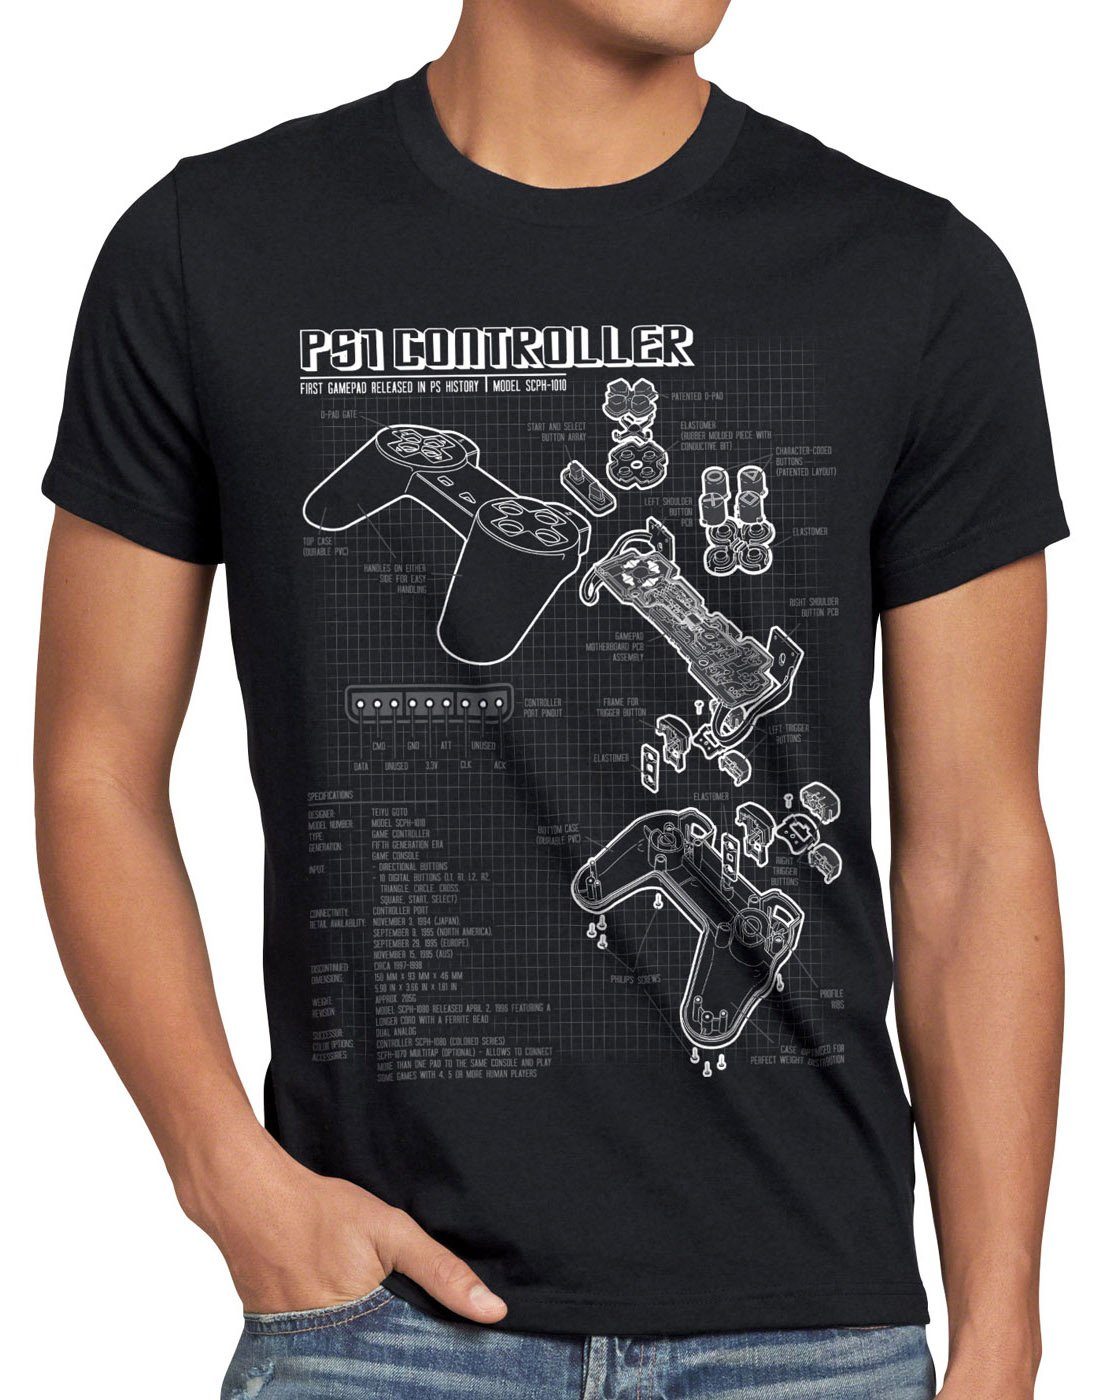 style3 Print-Shirt Herren T-Shirt PS1 Controller Blaupause PS gamepad konsole classic gamer schwarz